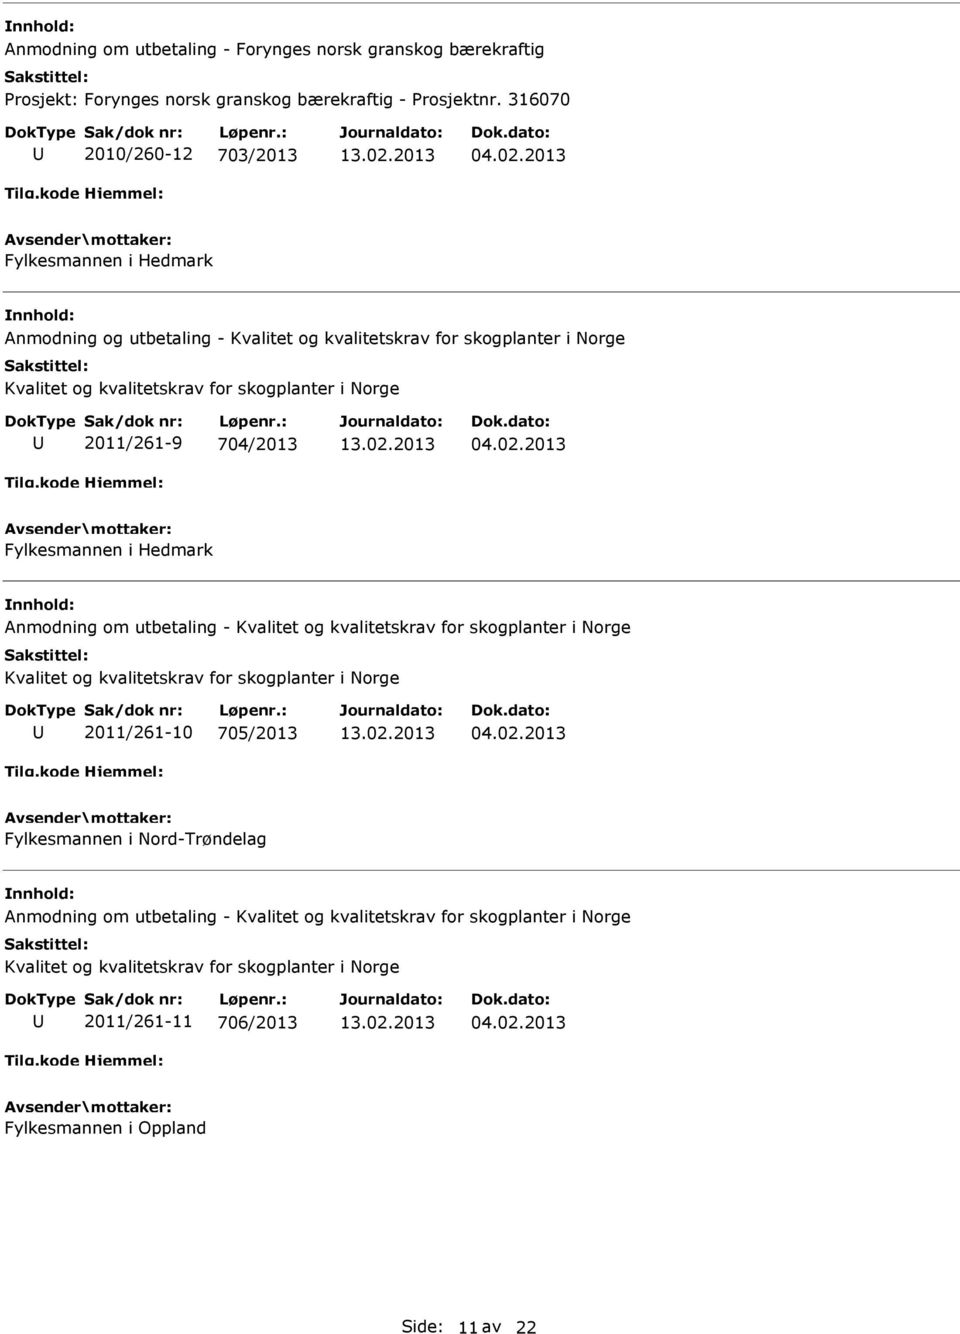 2013 Fylkesmannen i Hedmark Anmodning om utbetaling - Kvalitet og kvalitetskrav for skogplanter i Norge Kvalitet og kvalitetskrav for skogplanter i Norge 2011/261-10 705/2013 04.02.